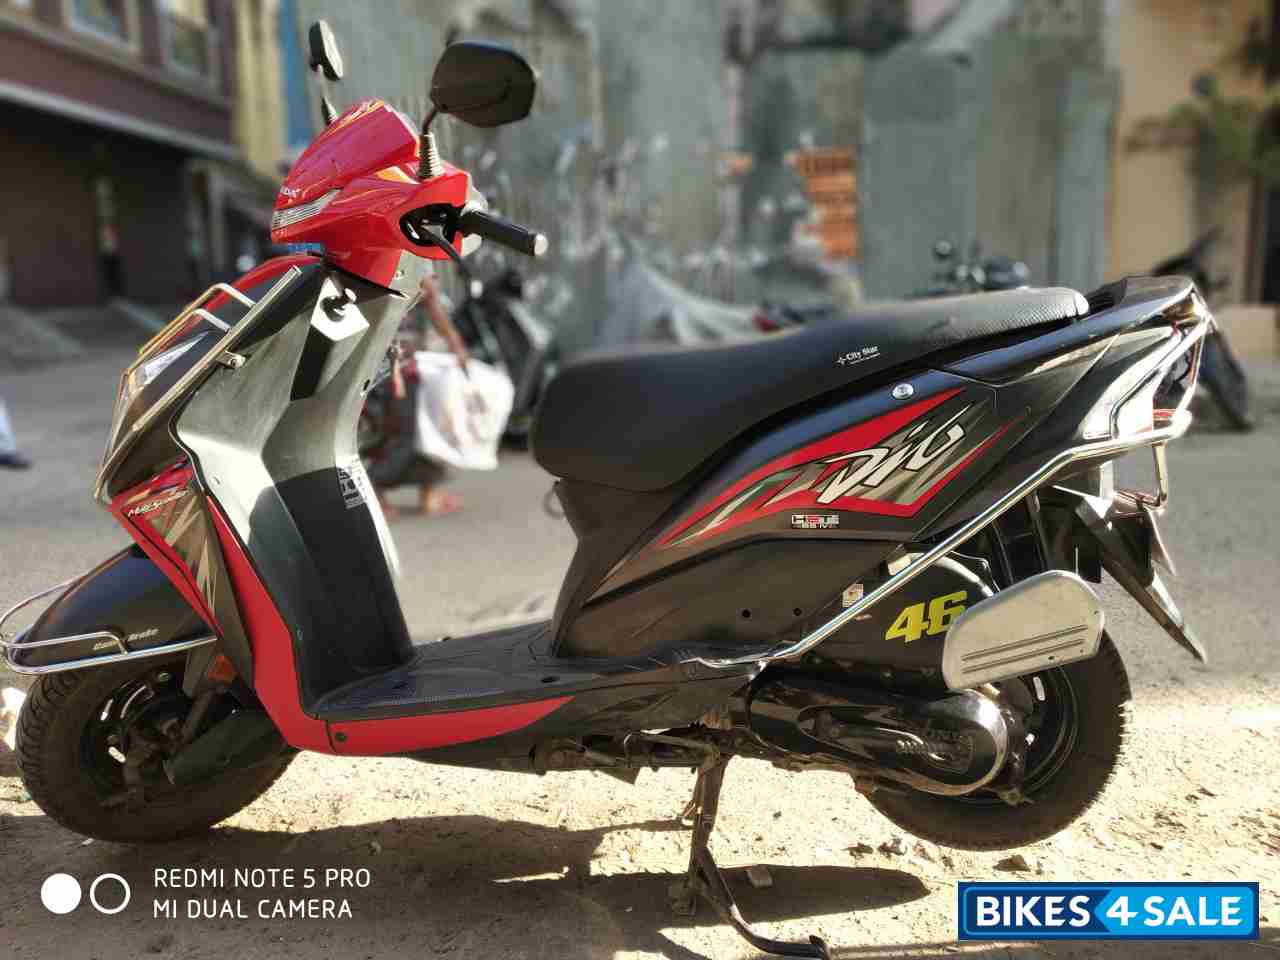 Honda Dio 2019 Model Price In Chennai